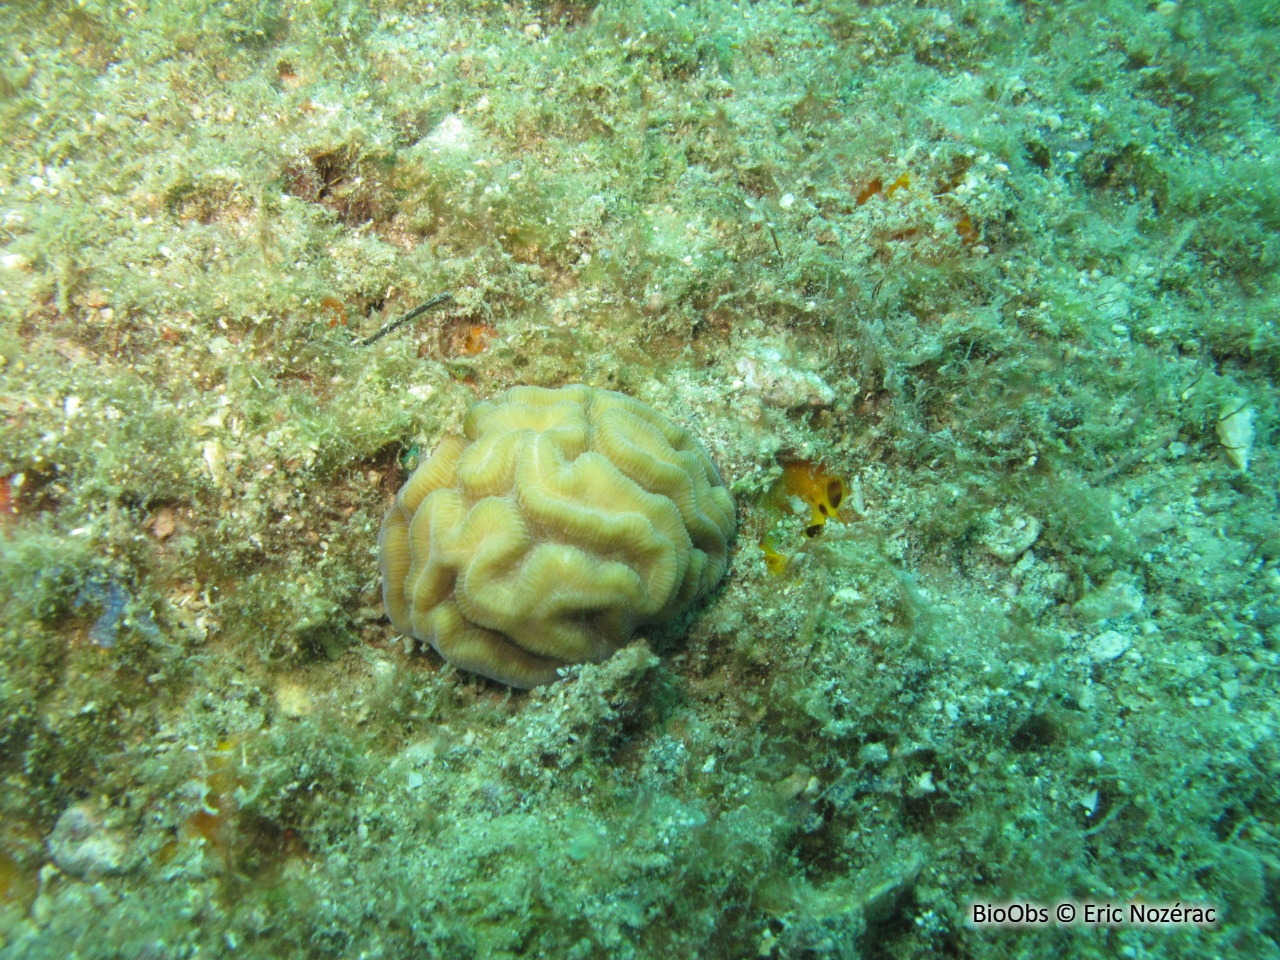 Rose de corail - Manicina areolata - Eric Nozérac - BioObs